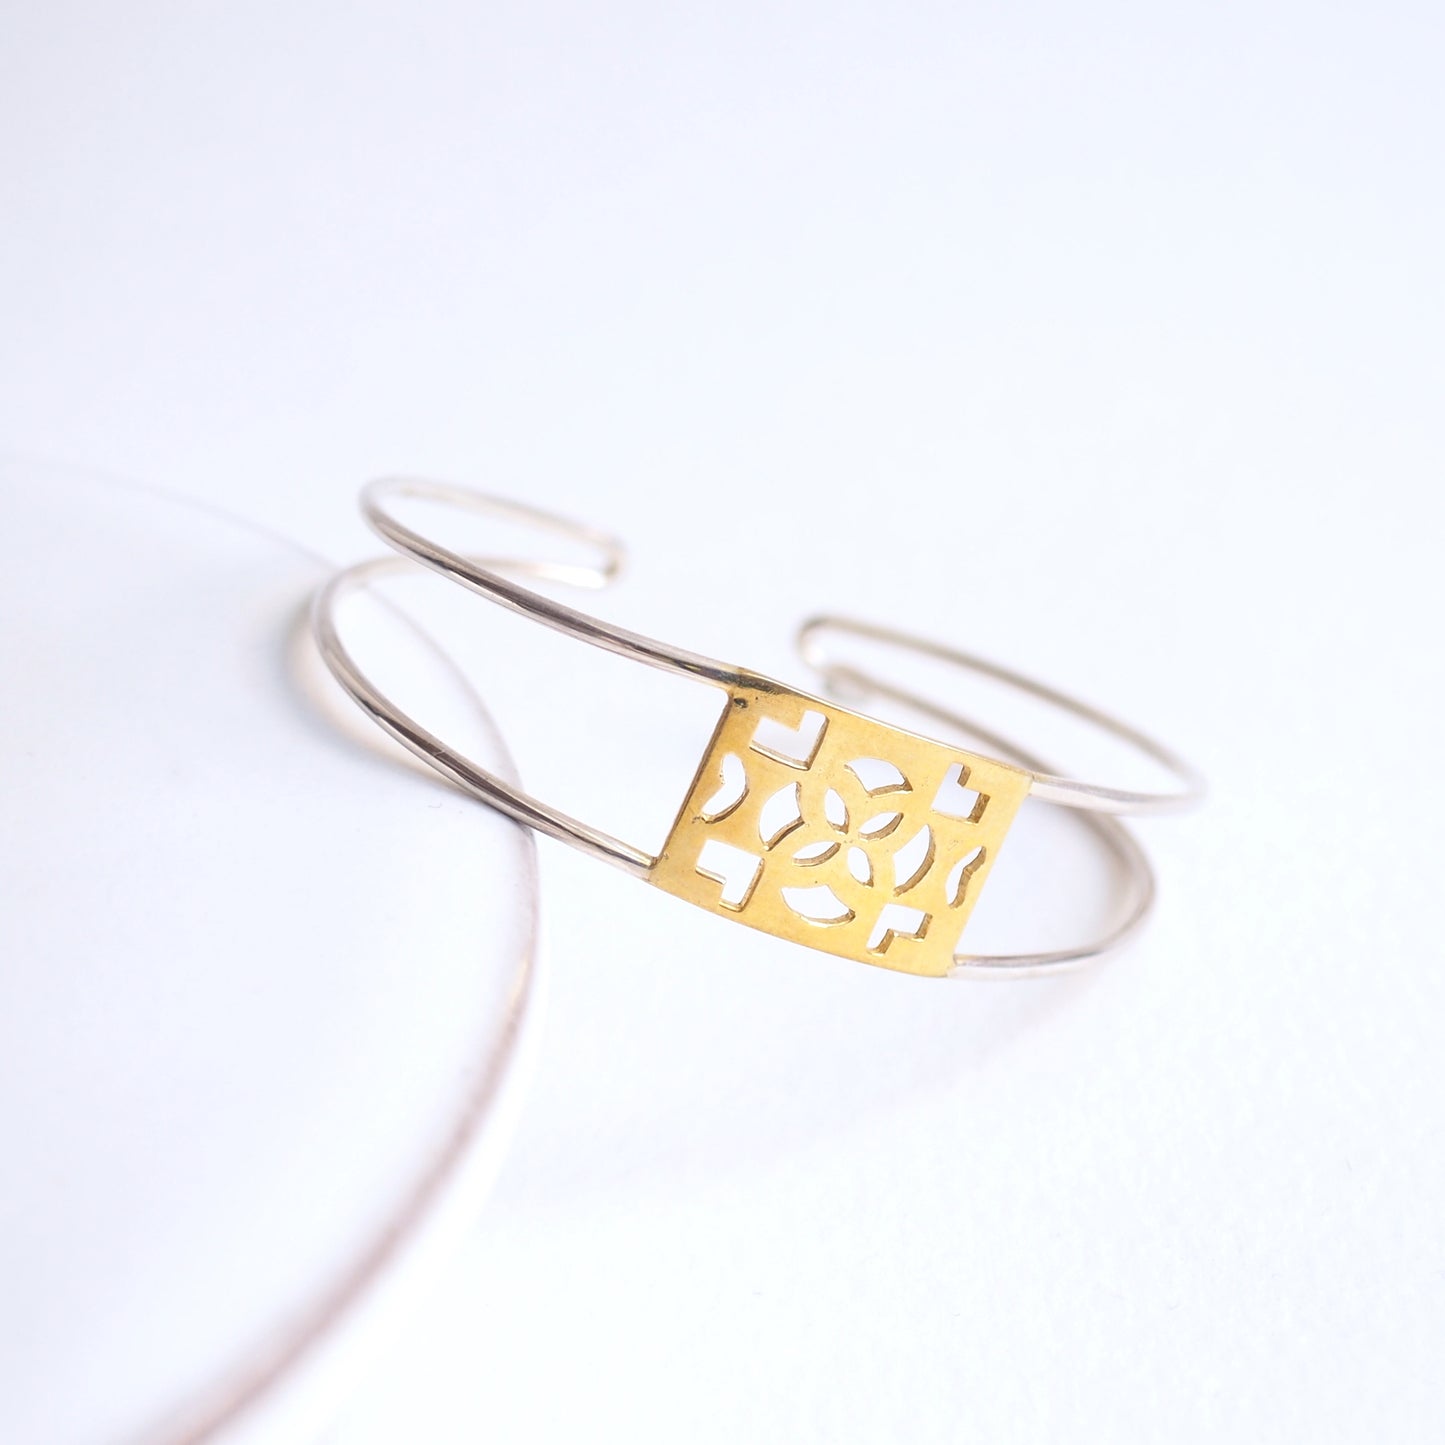 Azulejos Bracelet Bangle jewellery jewelry ring silver gold handmade handcrafted fashion custom bespoke 